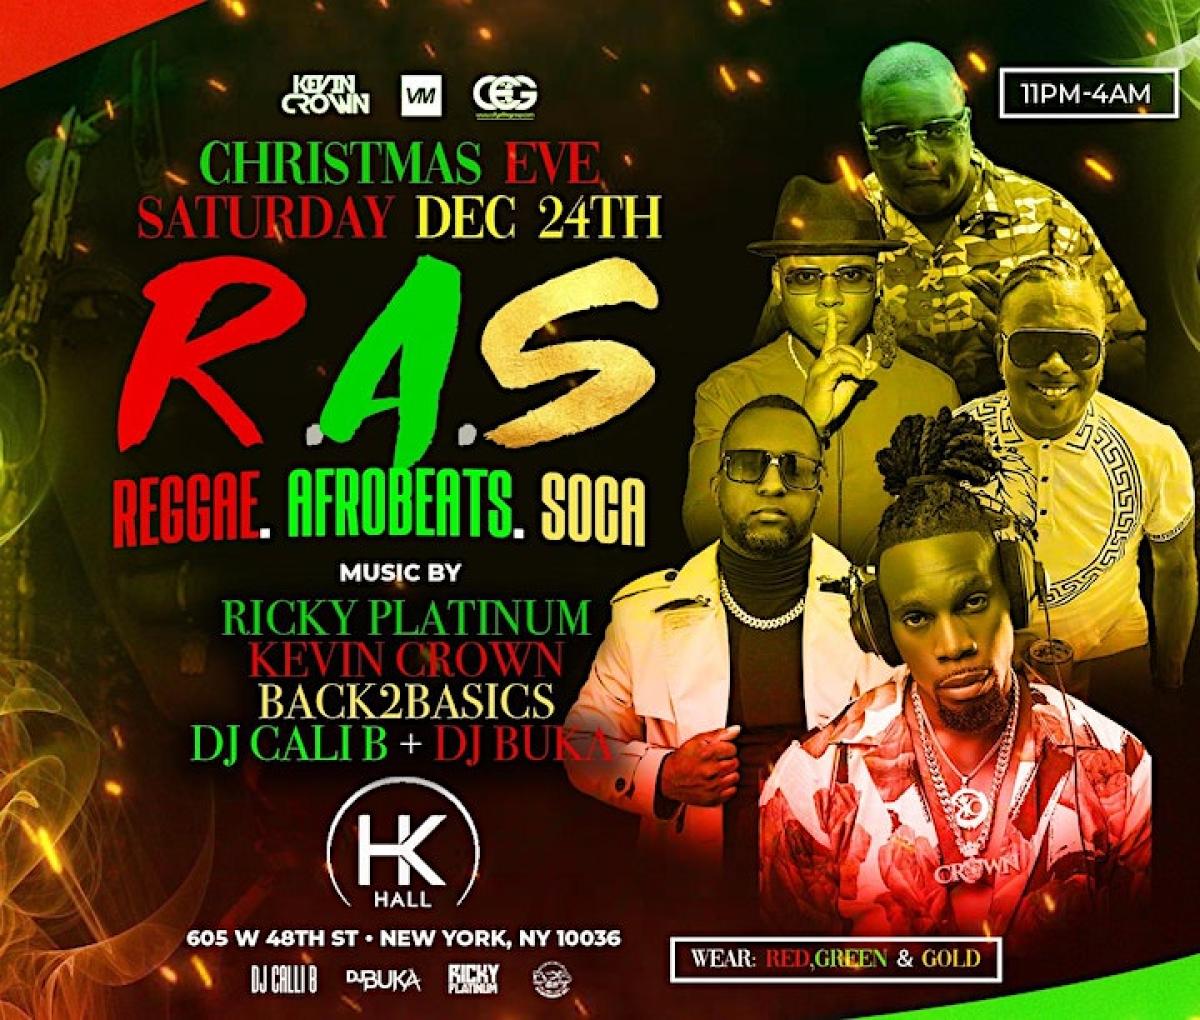 R.A.S - Reggae . AfroBeat . Soca  flyer or graphic.